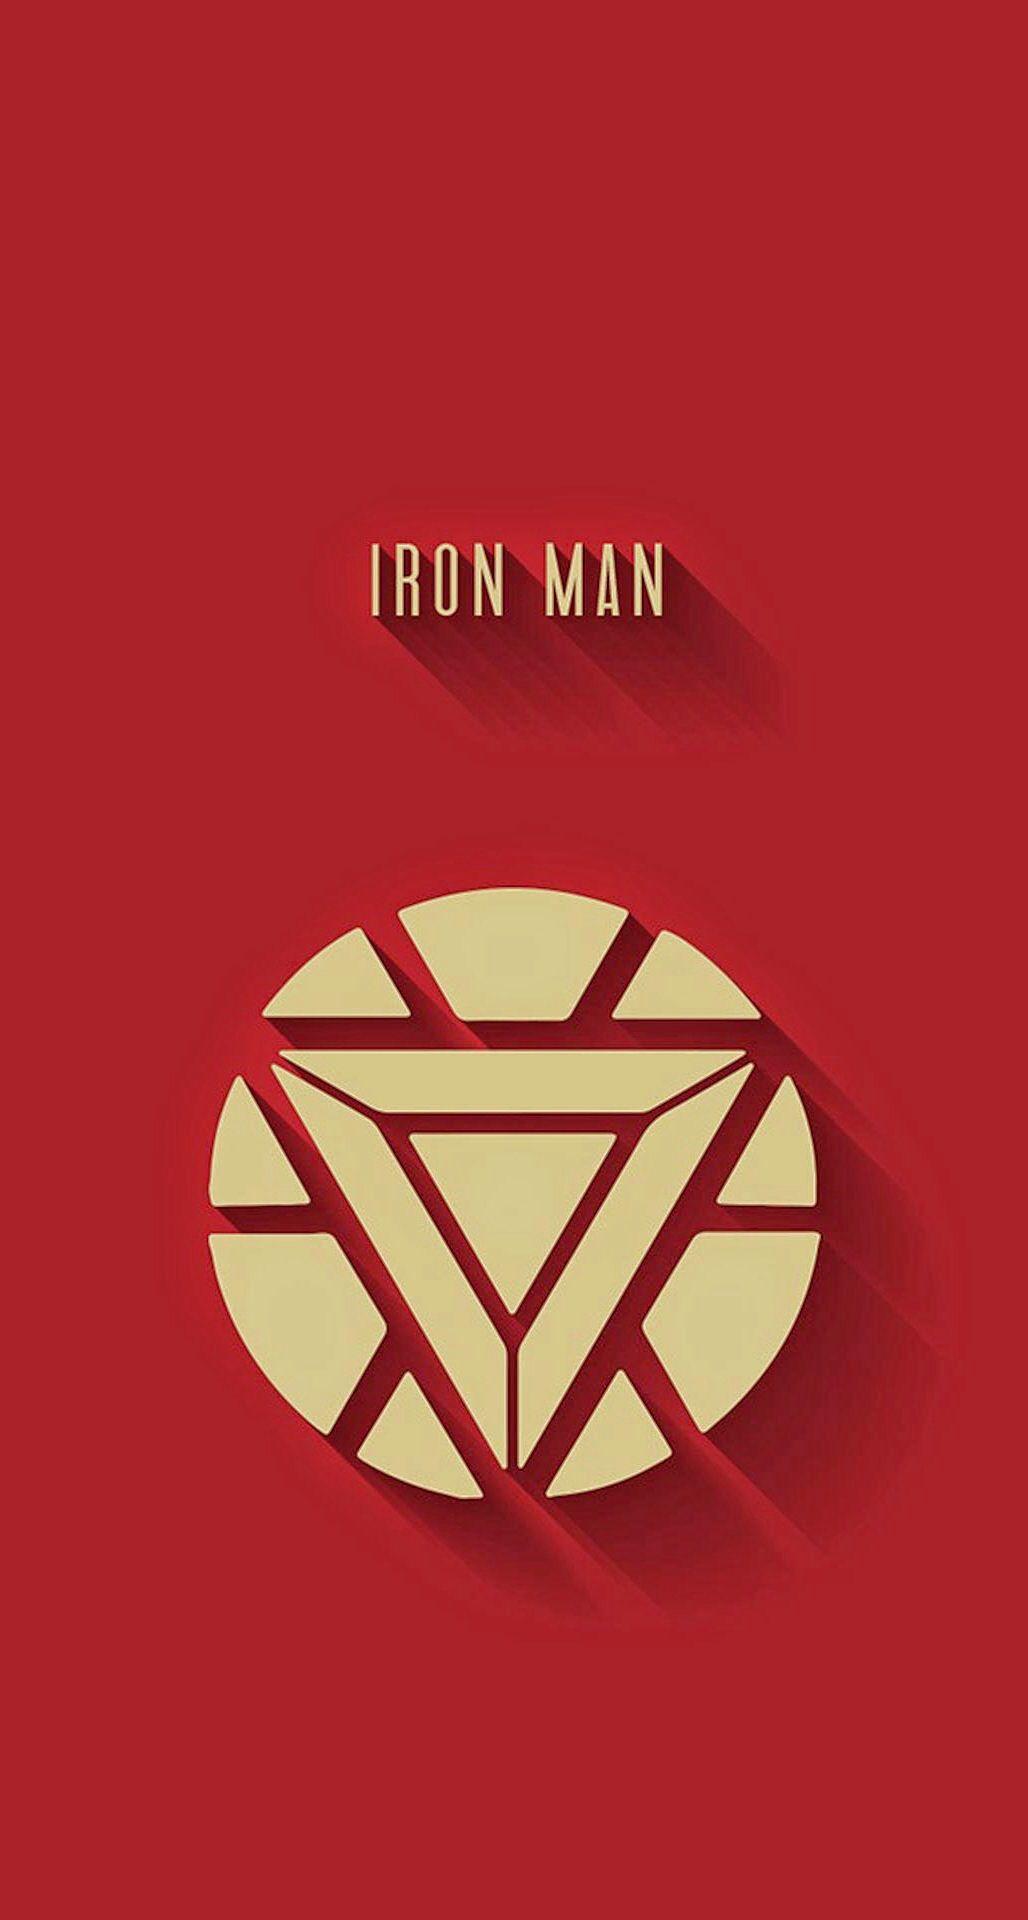 Ironman logo. Illustrations. Logos, Marvel and Iron